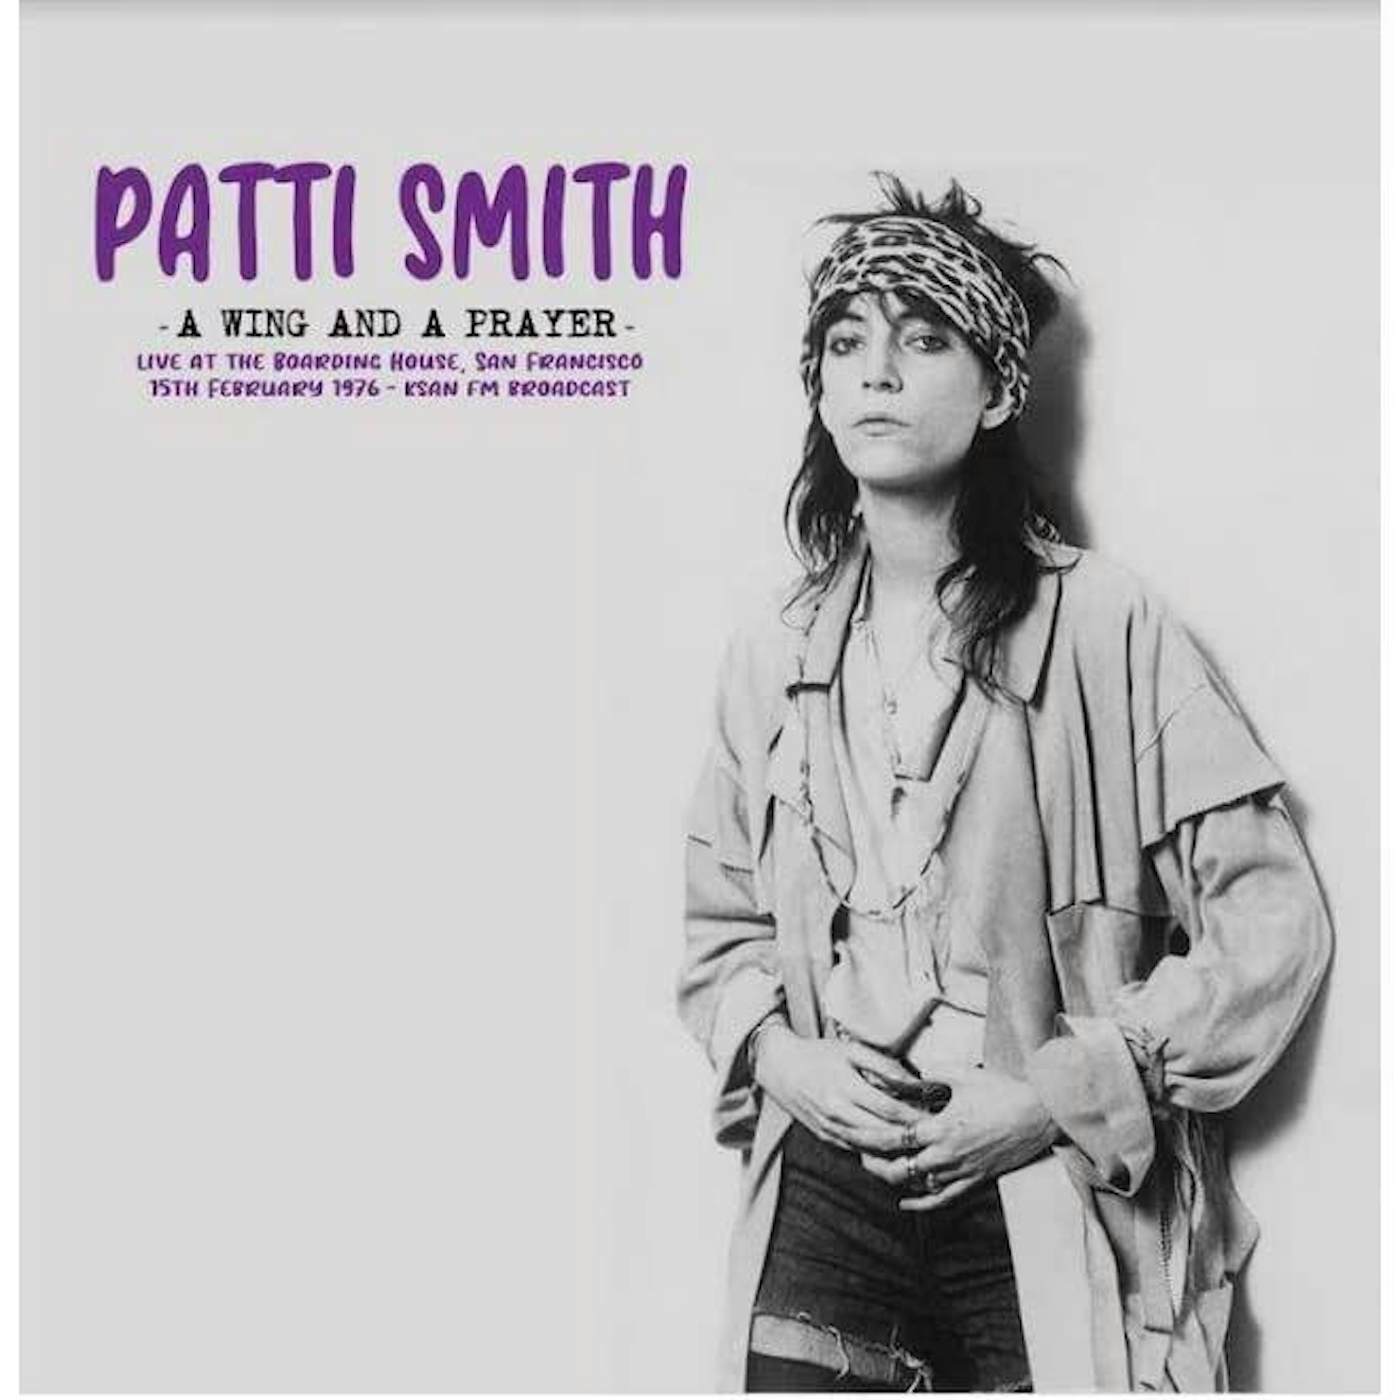 Patti Smith Wing & A Prayer: Live At The Boarding House, San Francisco 15th February 1976 - Ksan Fm Broadcast Vinyl Record